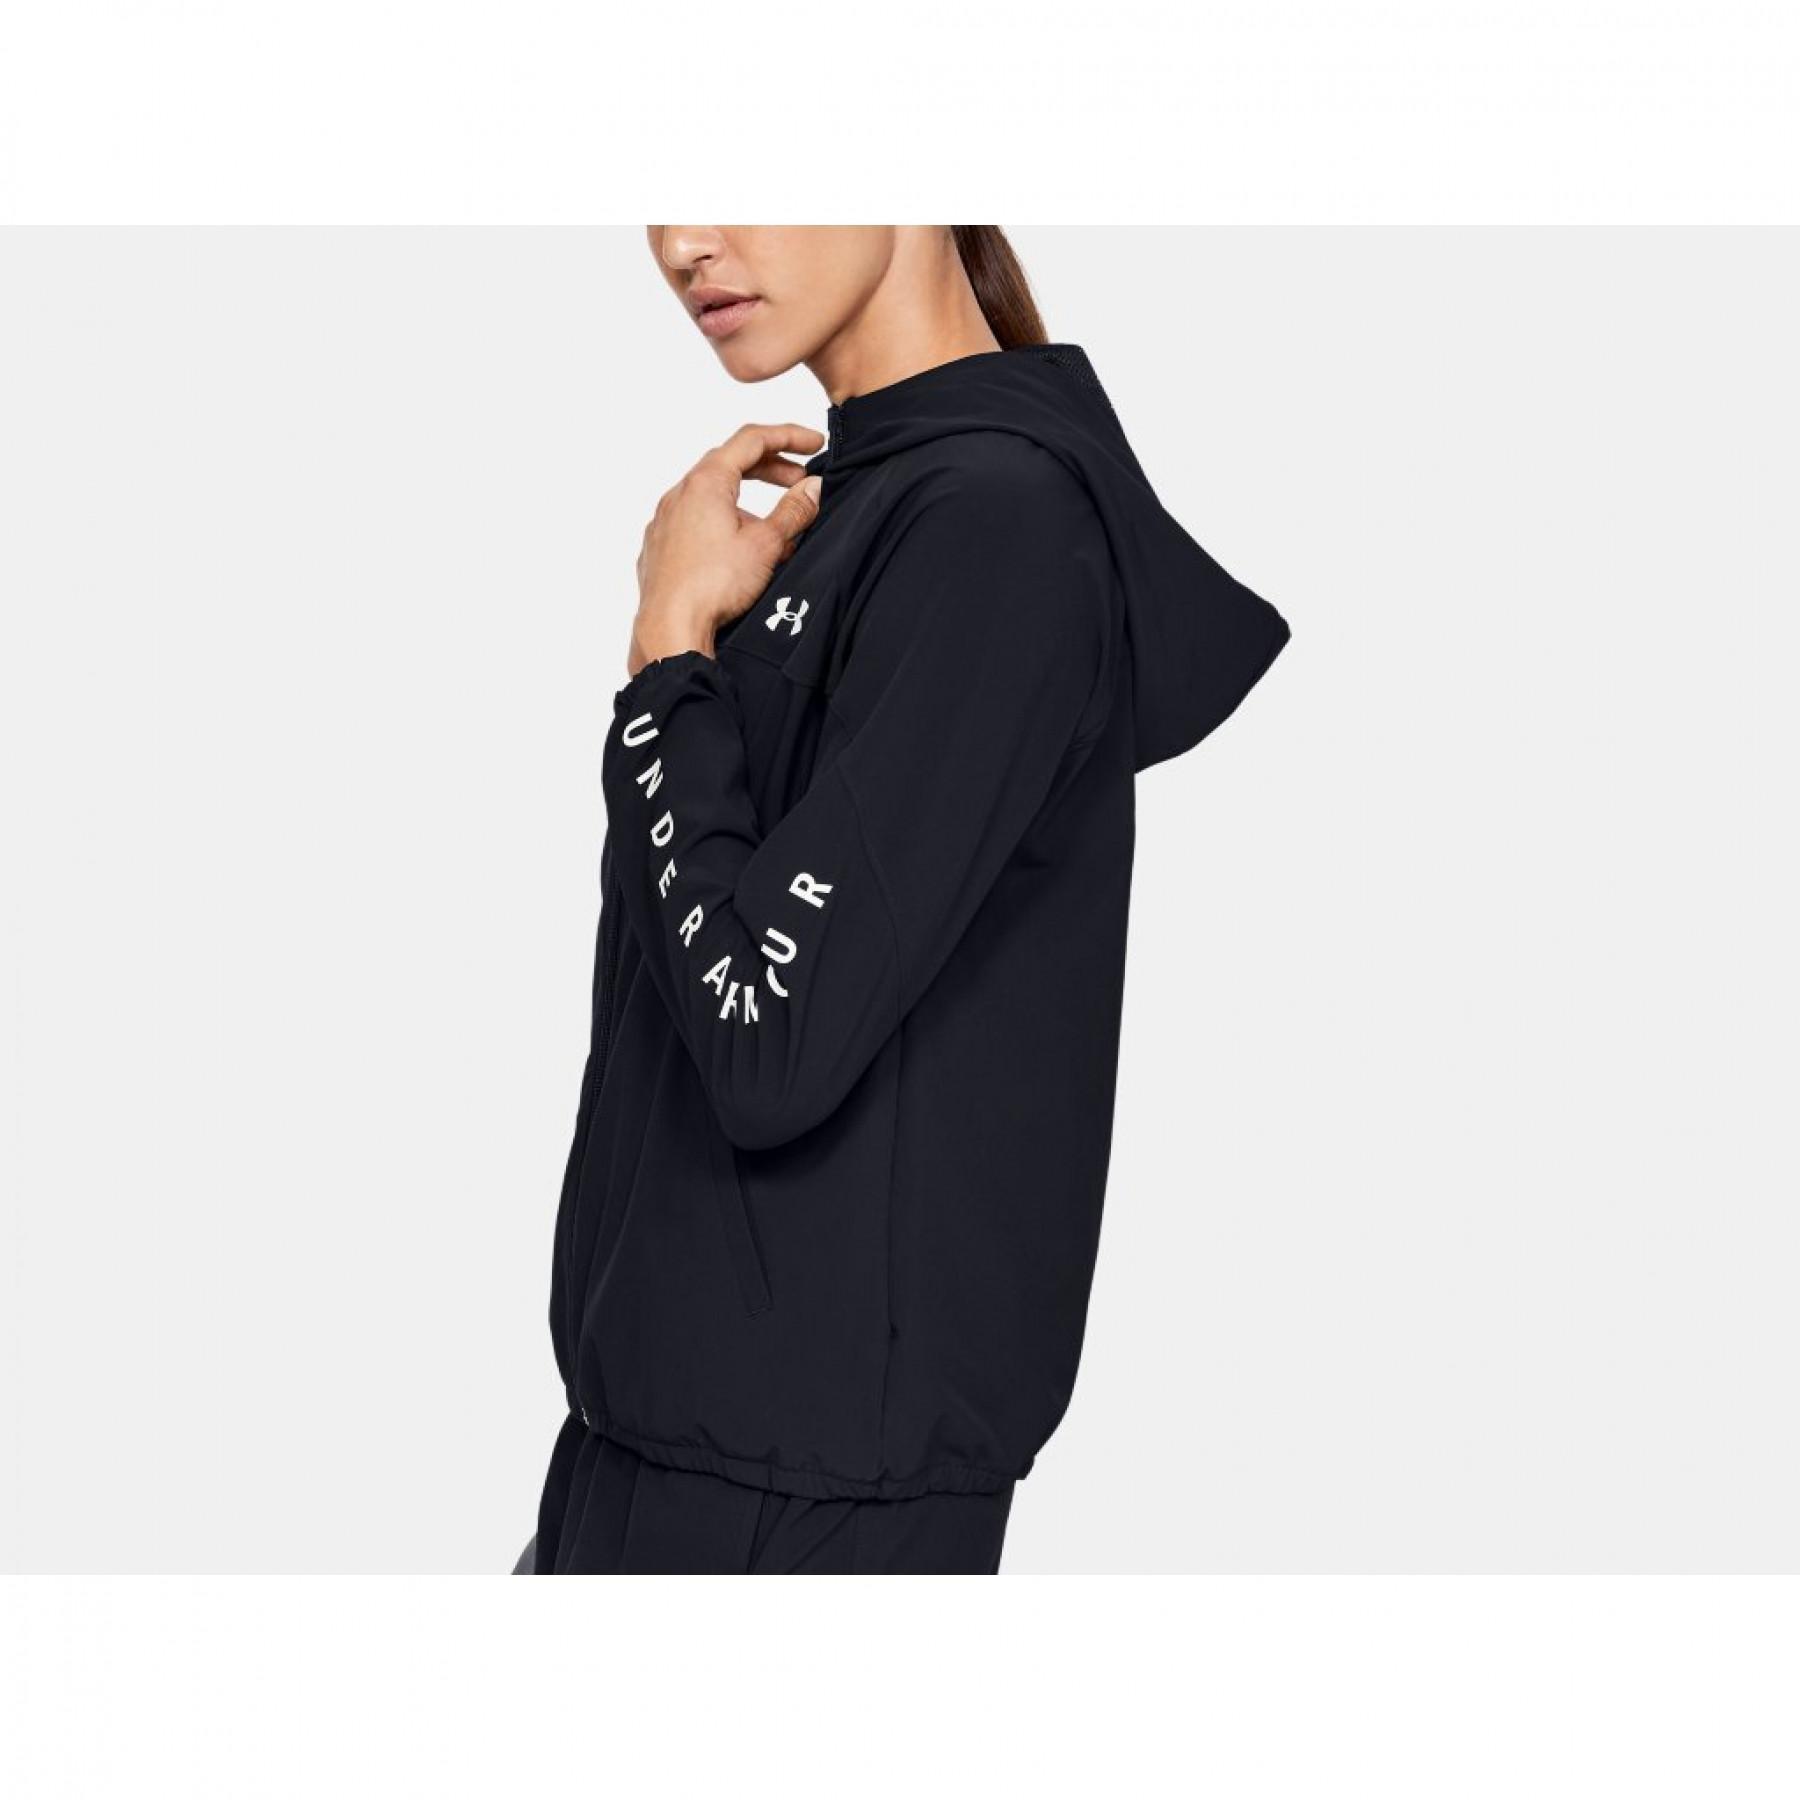 Women's hoodie Under Armour Woven Branded Full Zip